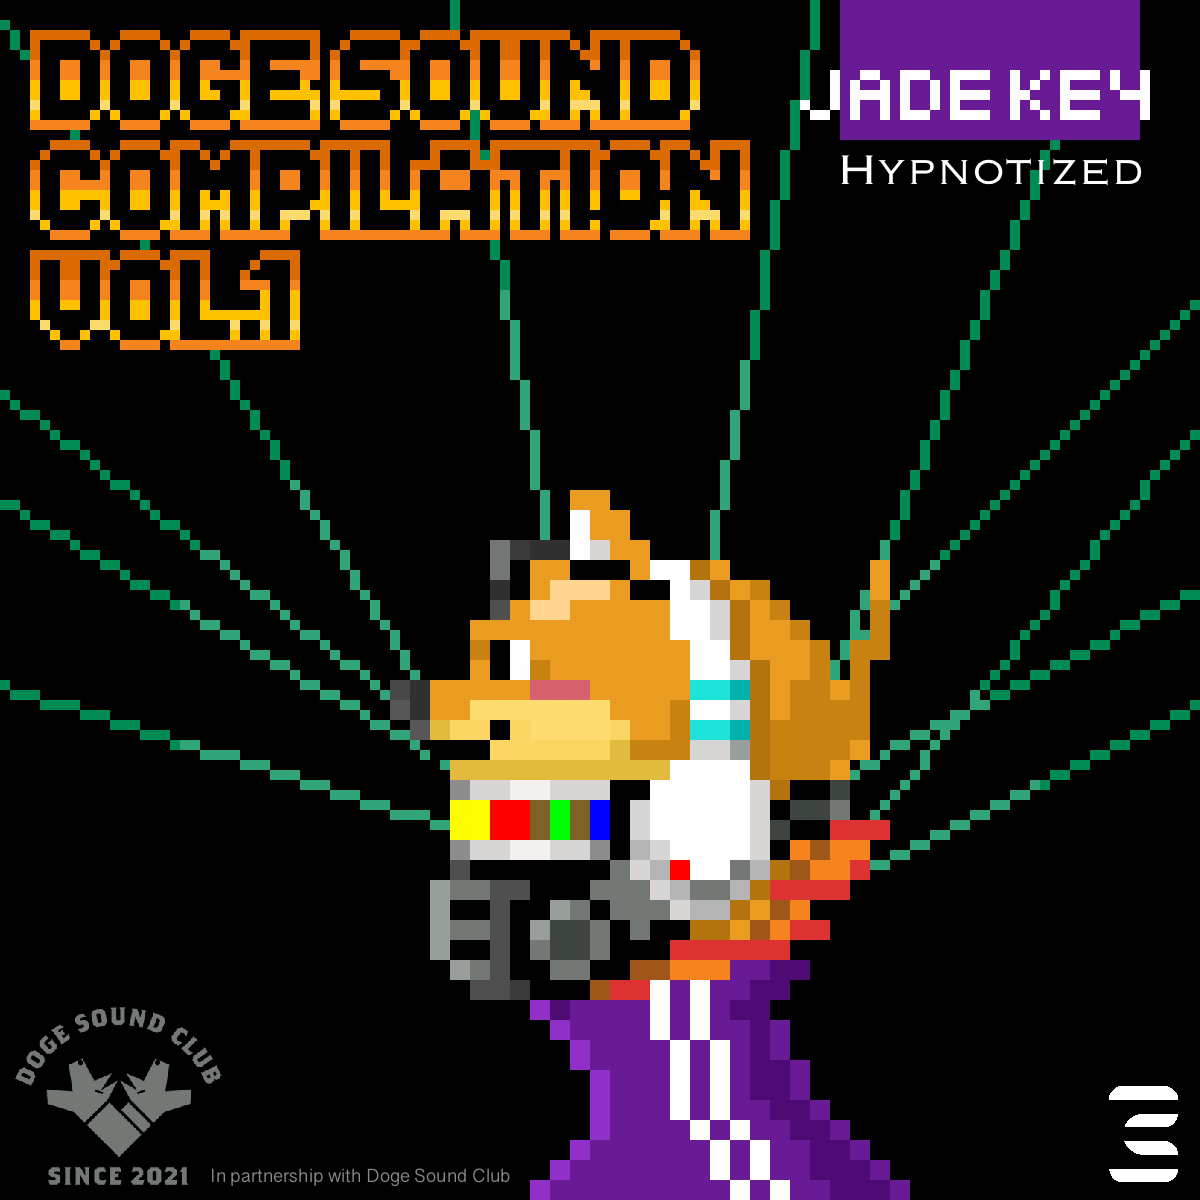 DogeSound Compilation vol. 1 - Jade Key version